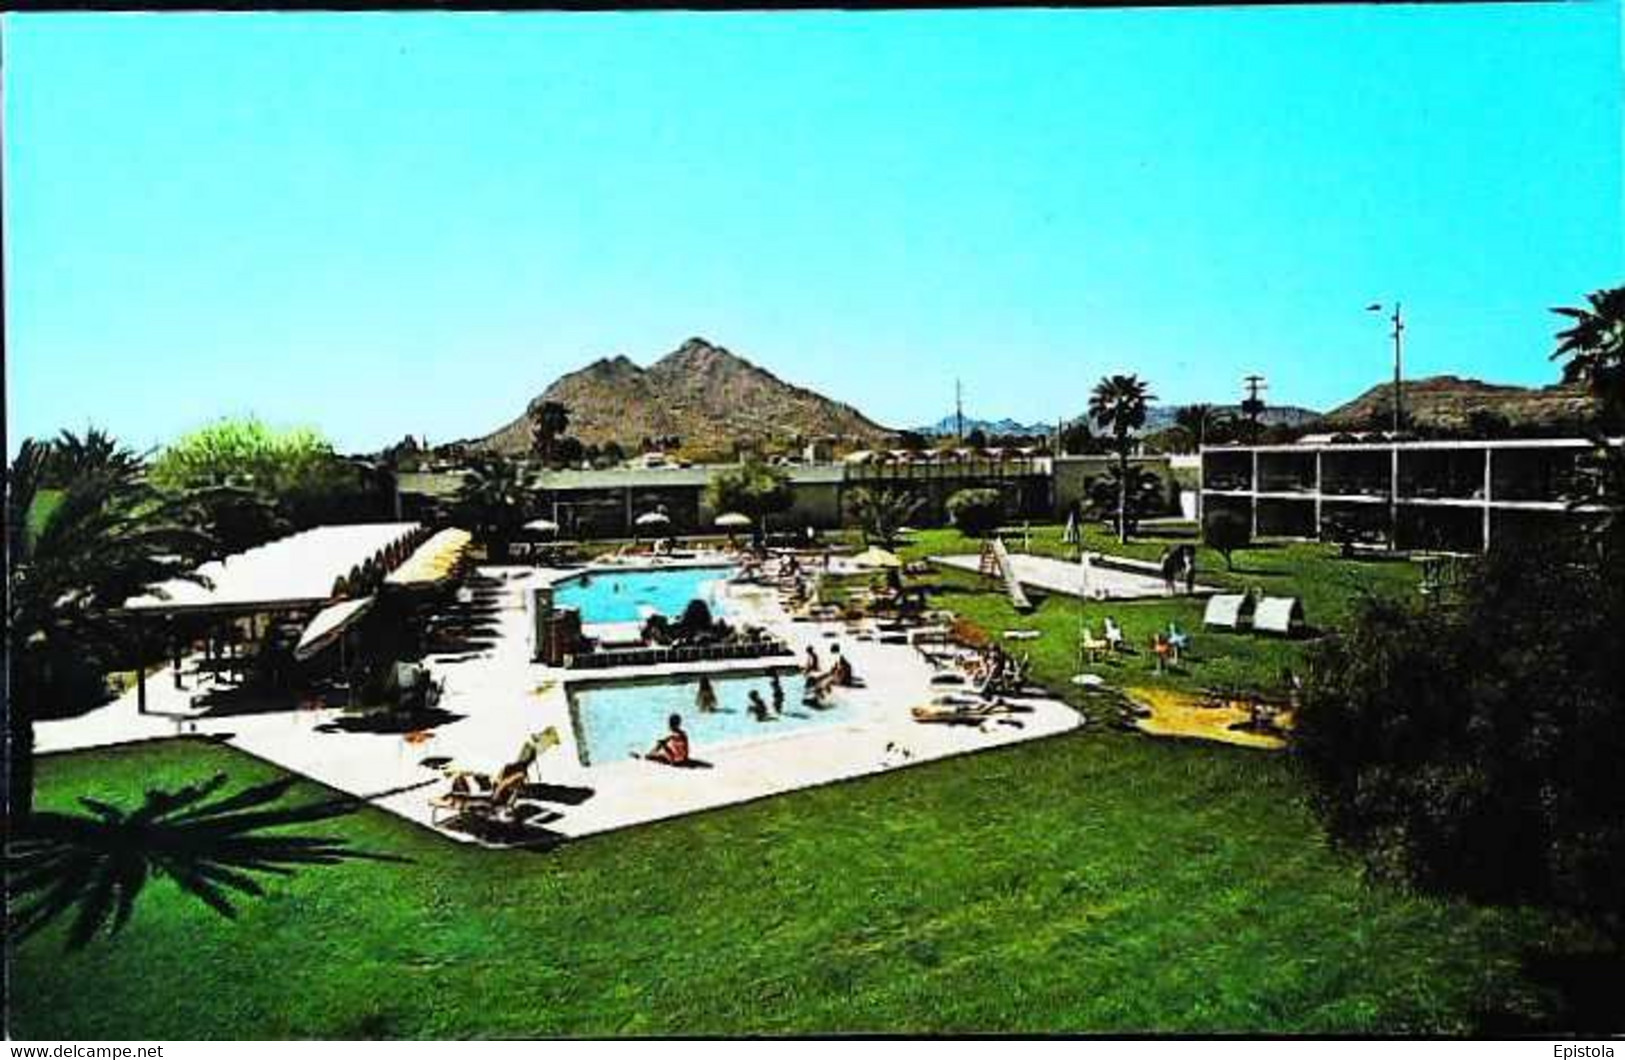 ►  Arizona Scottsdale Road Newest All Year Resort In Phoenix Area - Scottsdale